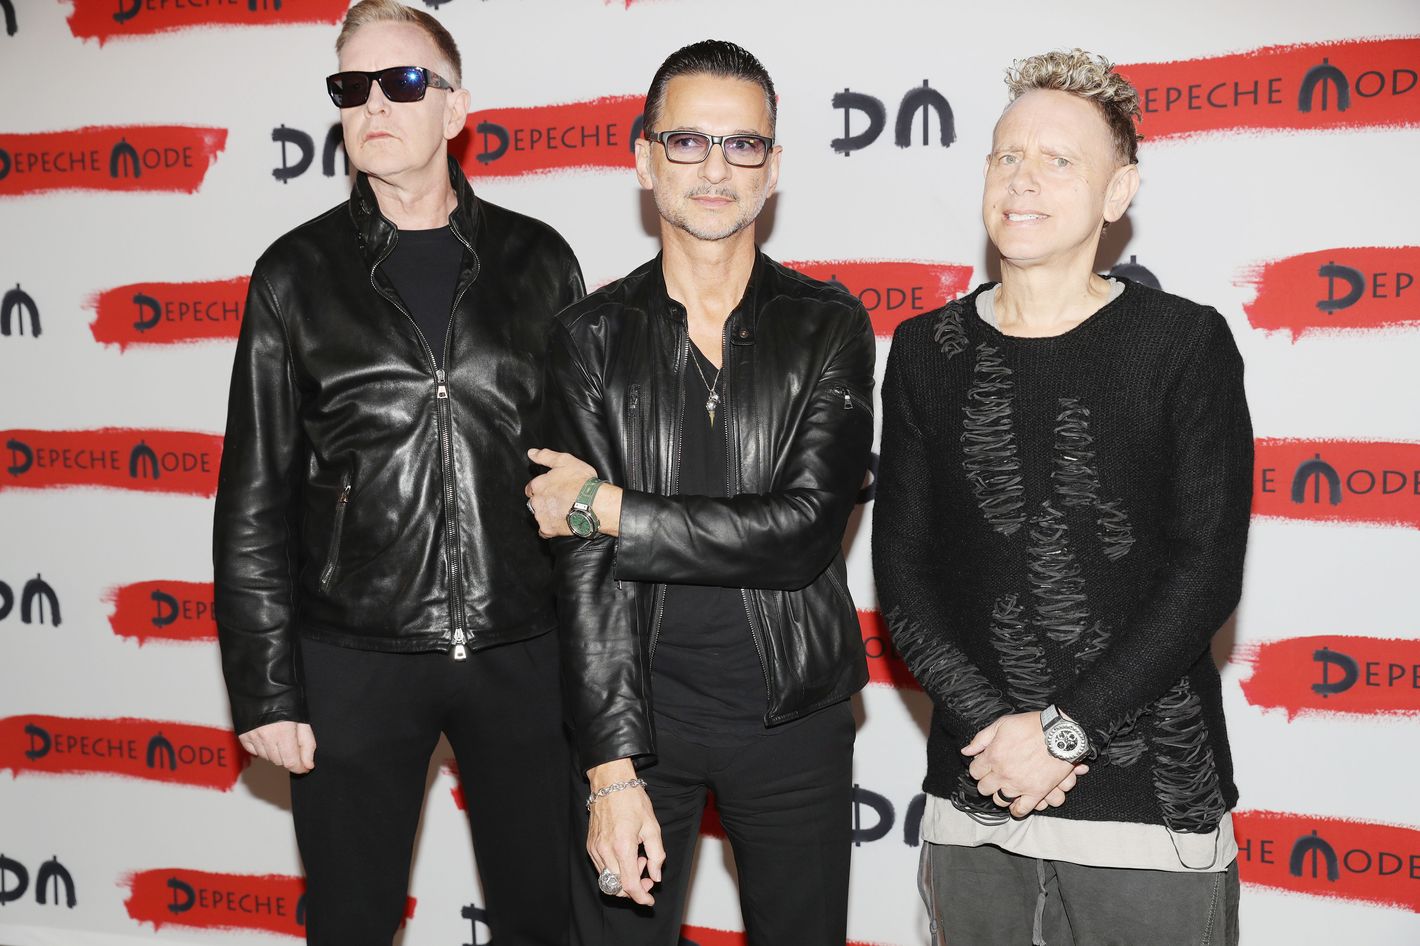 Depeche Mode rails against the alt-right